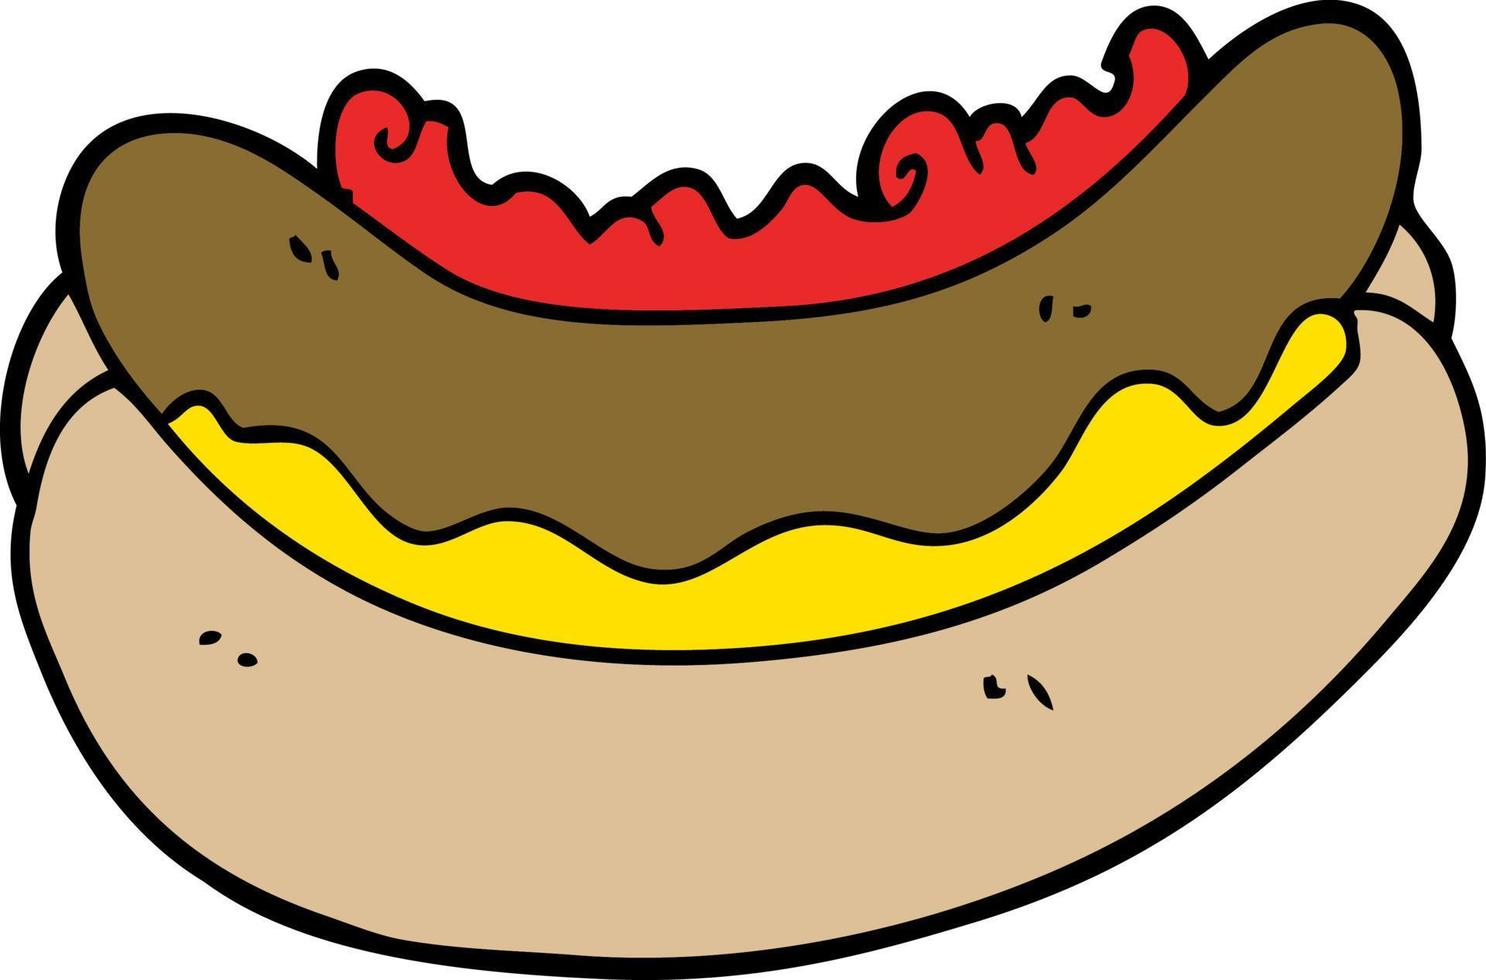 Cartoon-Doodle eines Hotdogs vektor